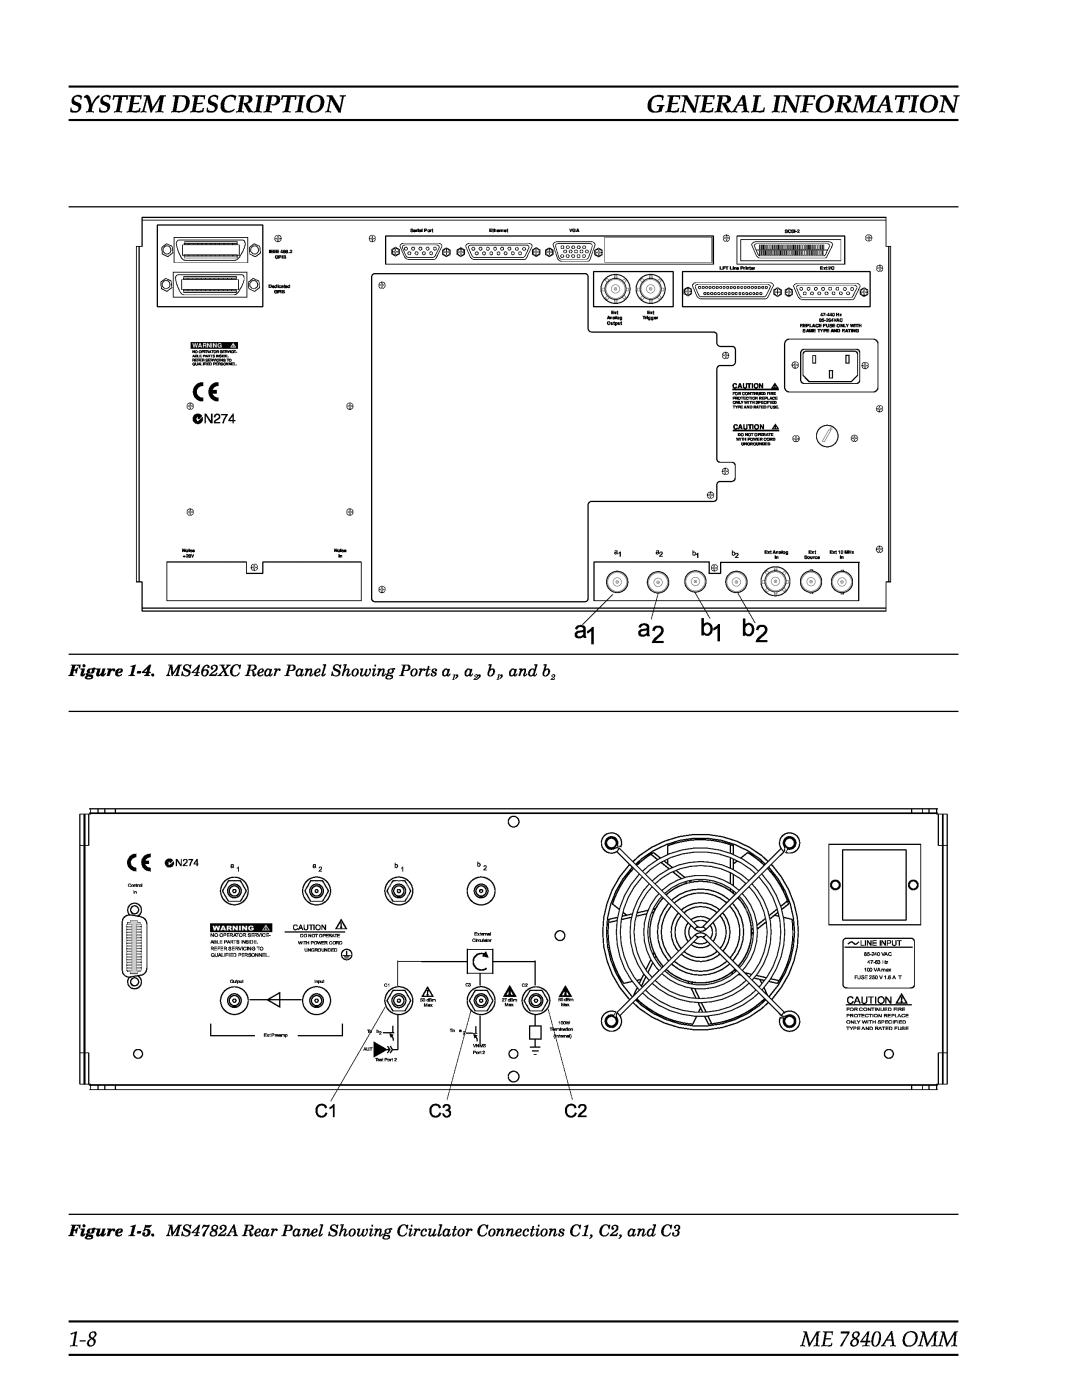 Anritsu ME7840A manual C1 C3C2, System Description, General Information, ME 7840A OMM 